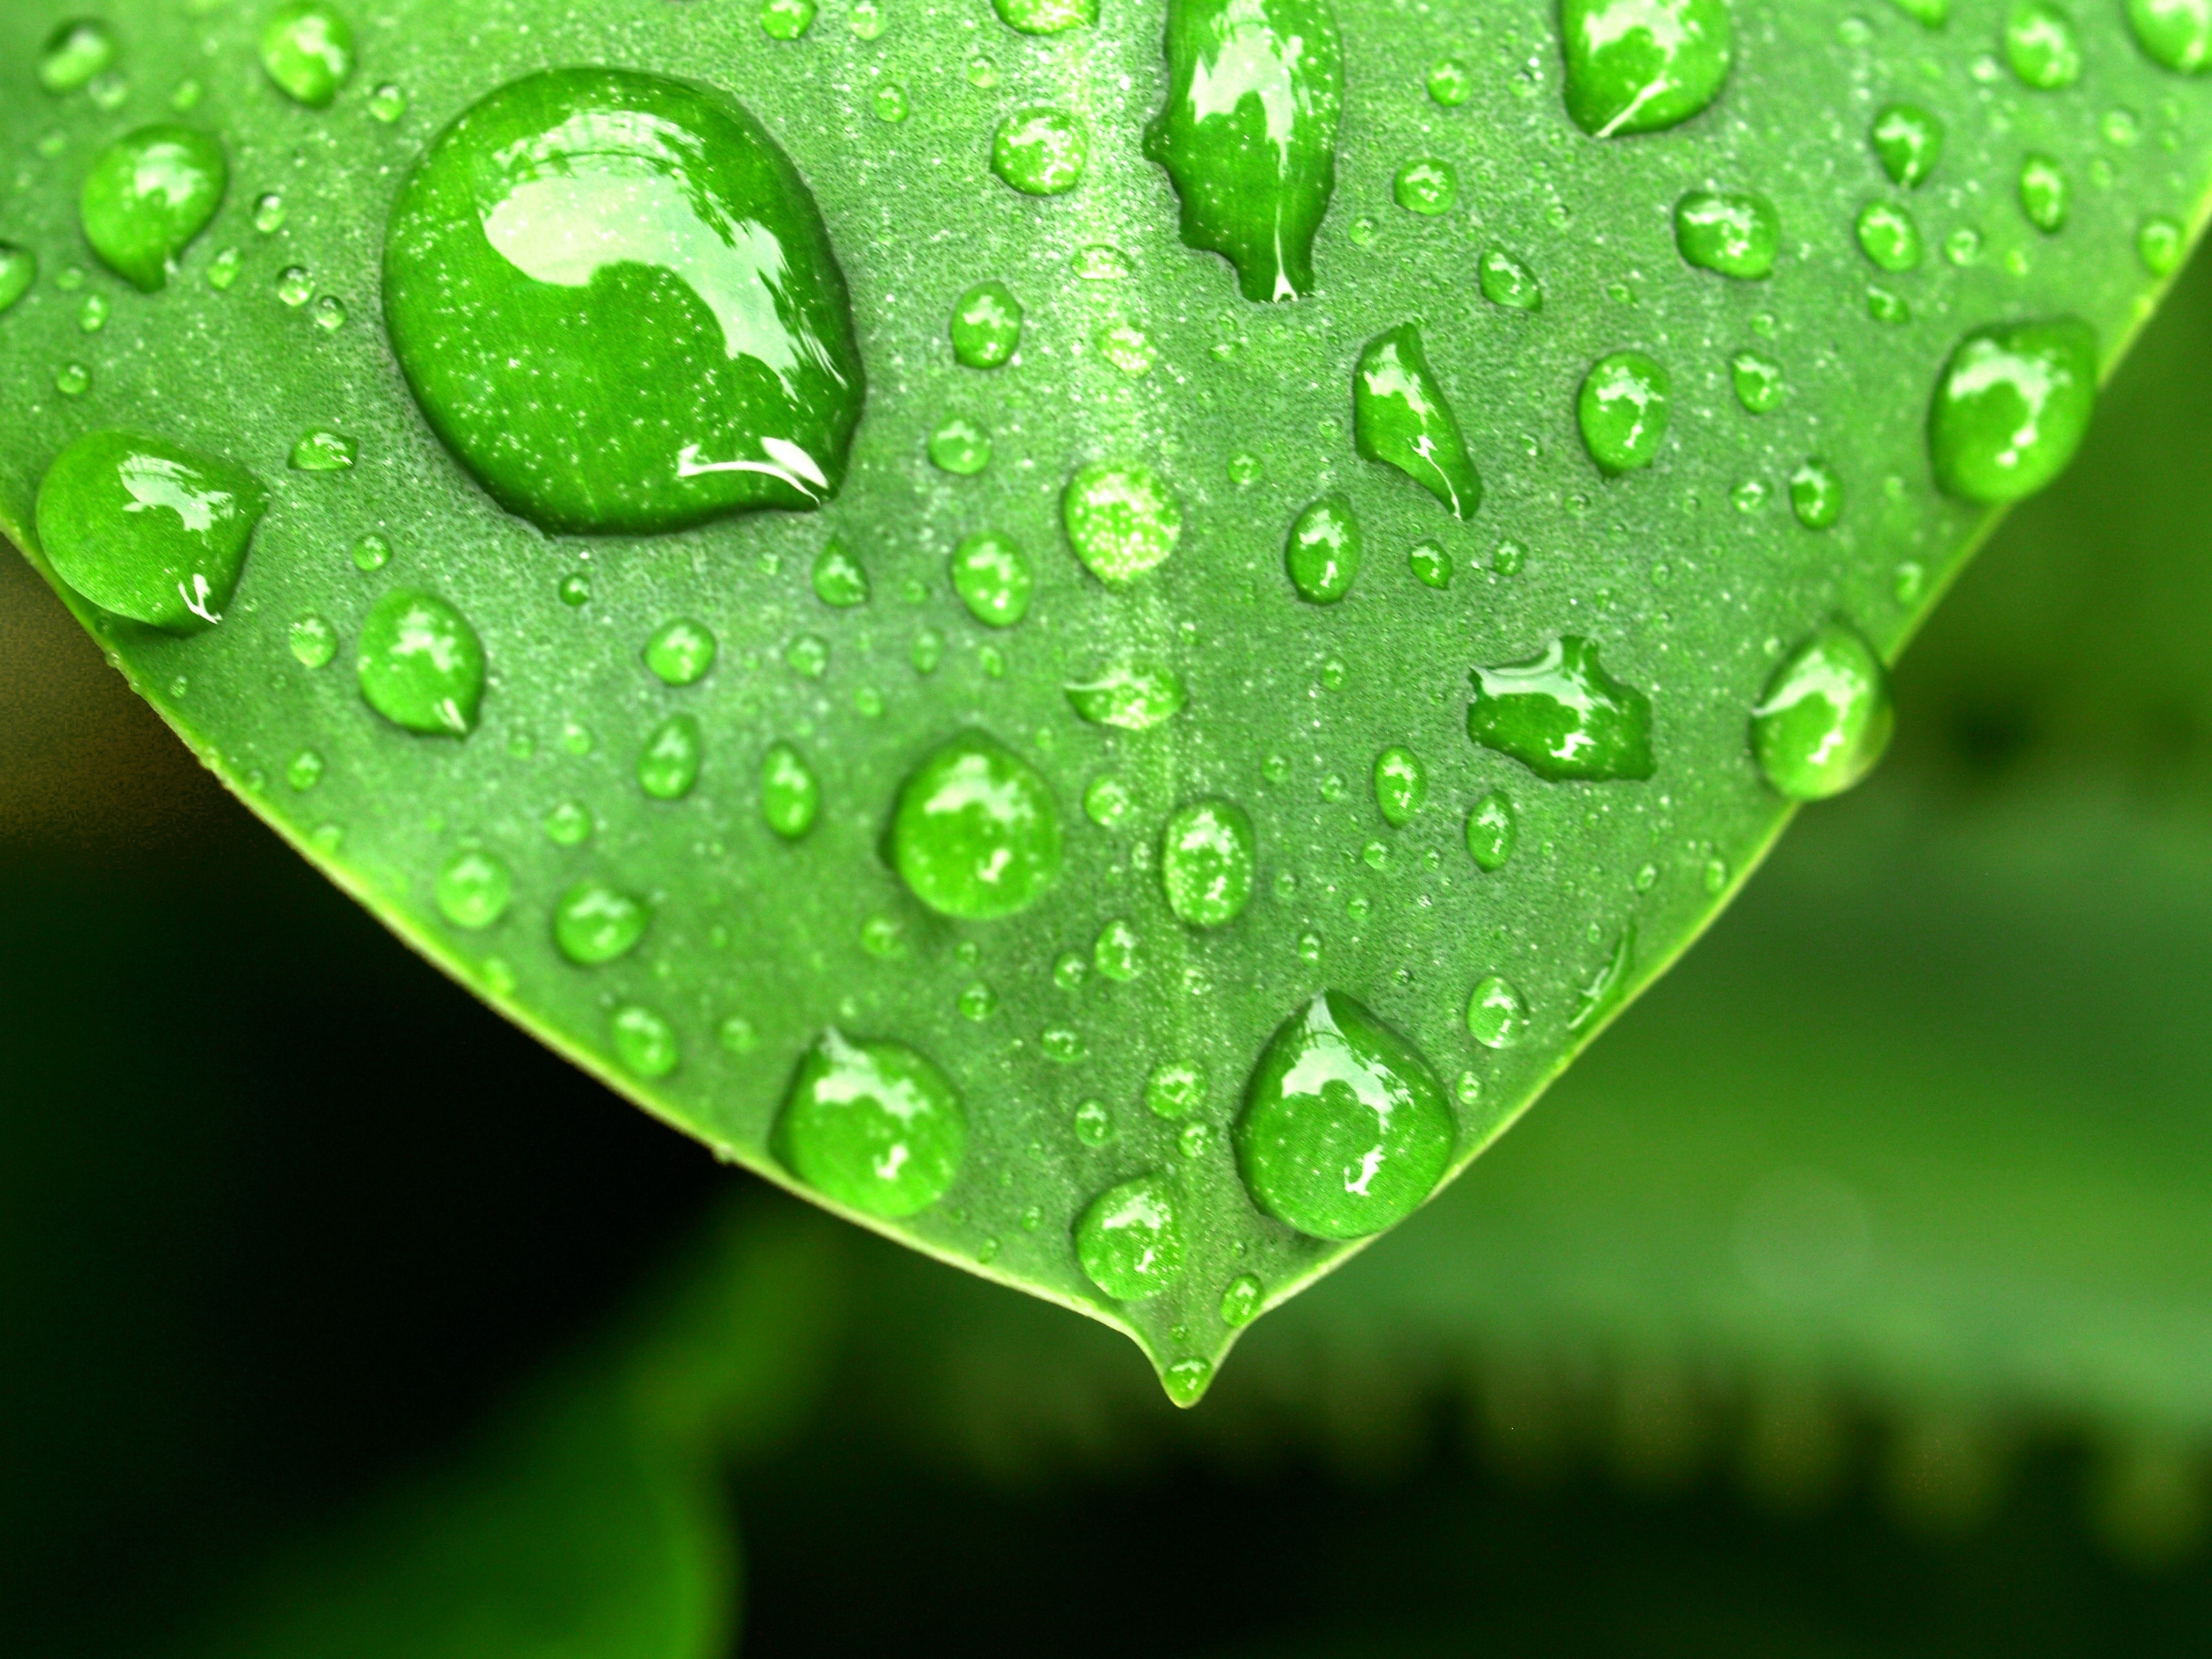 Water, Drops, Leaf, Grass, Green, Dew, drop, leaf